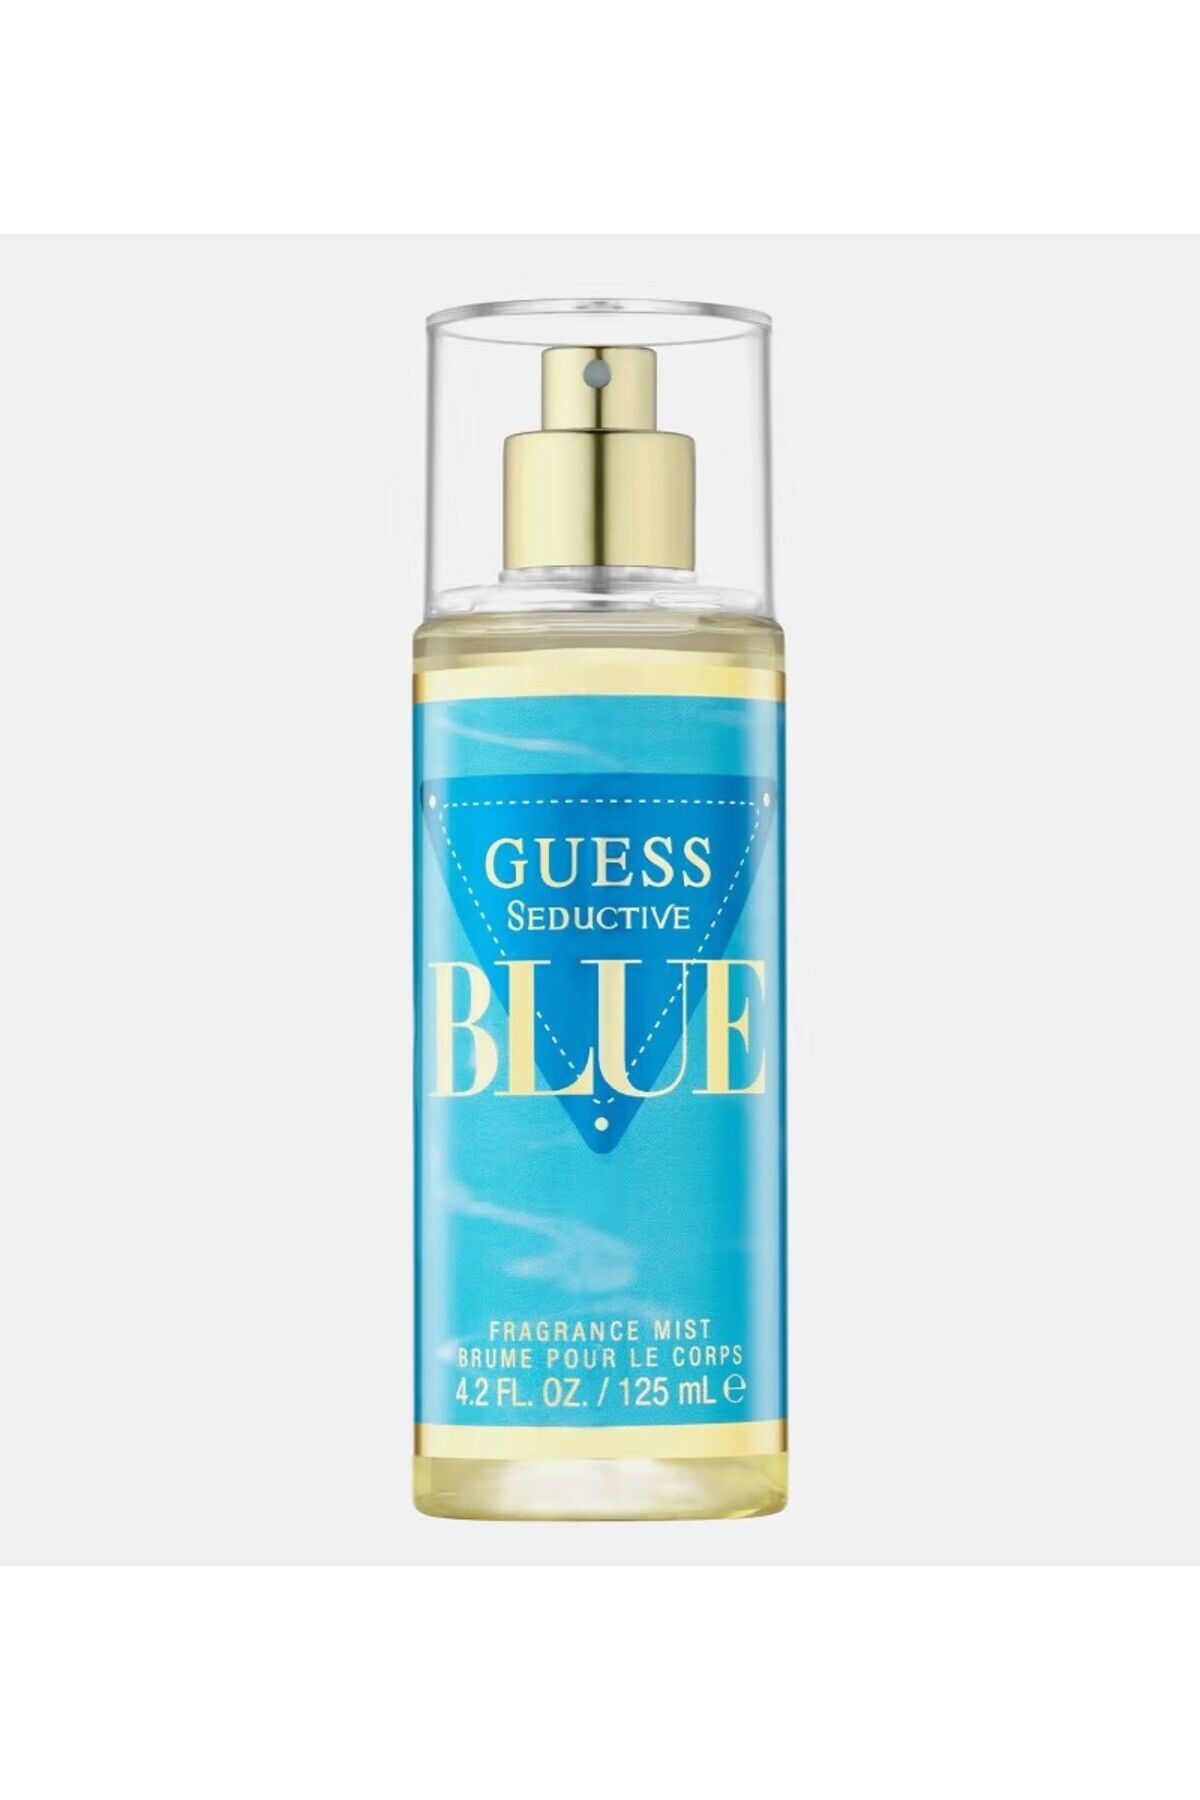 Guess Seductive Blue For Women Frag Mist 125 ml